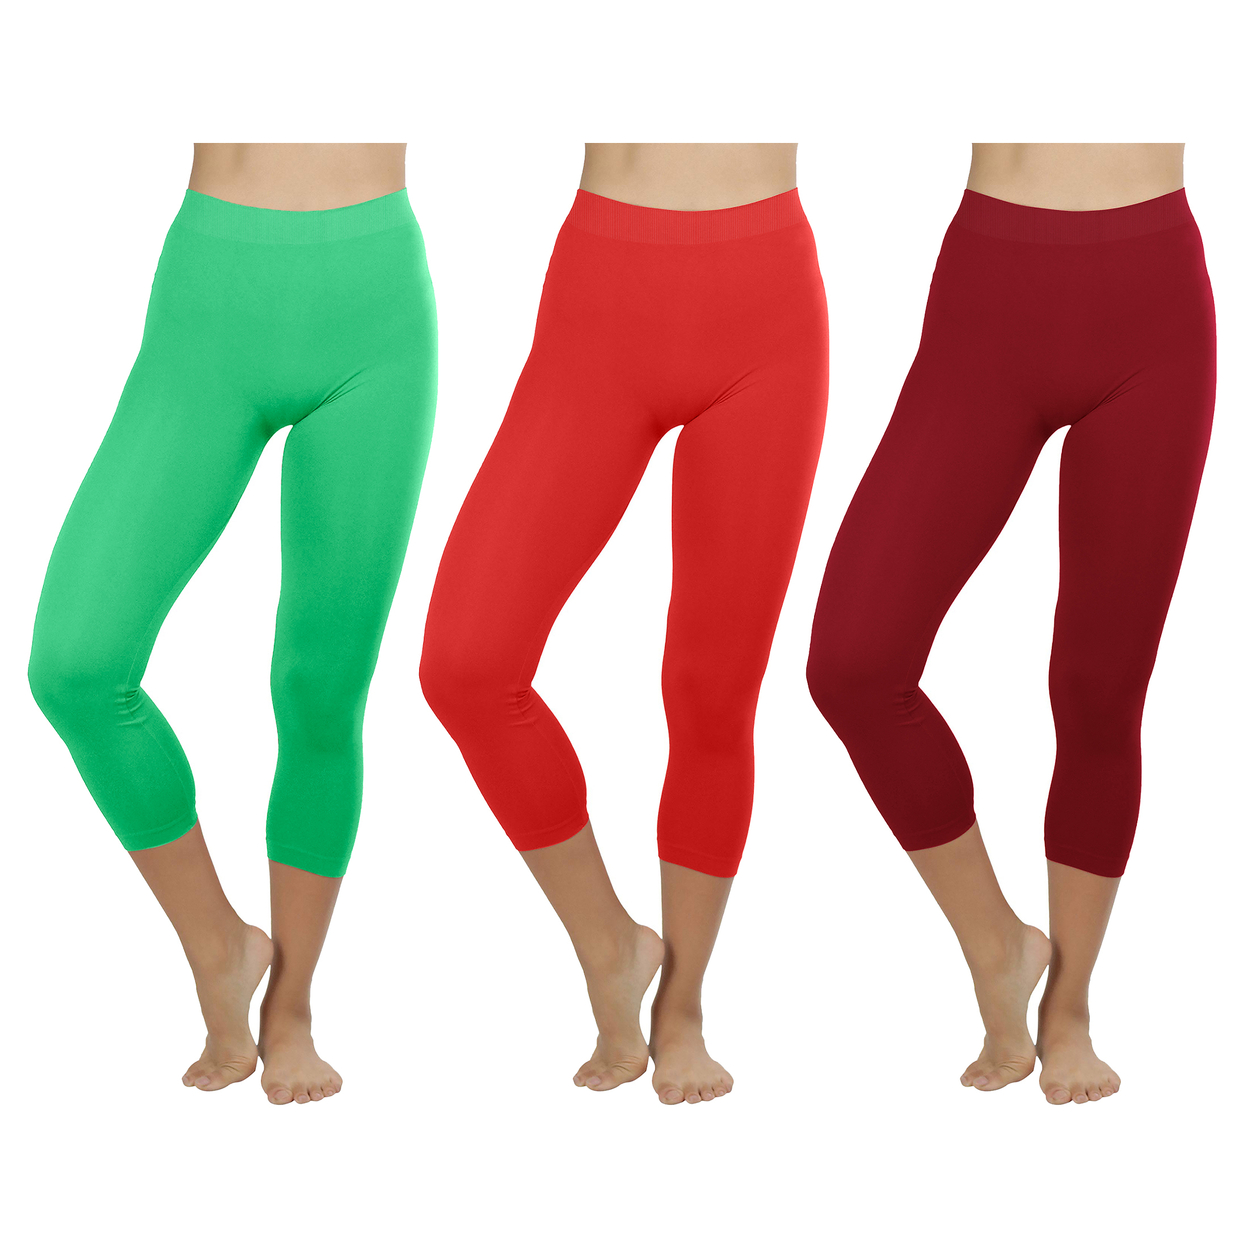 3-Pack: Women's Ultra-Soft High Waisted Smooth Stretch Active Yoga Capri Leggings - Burgundy,burgundy,burgundy, X-small